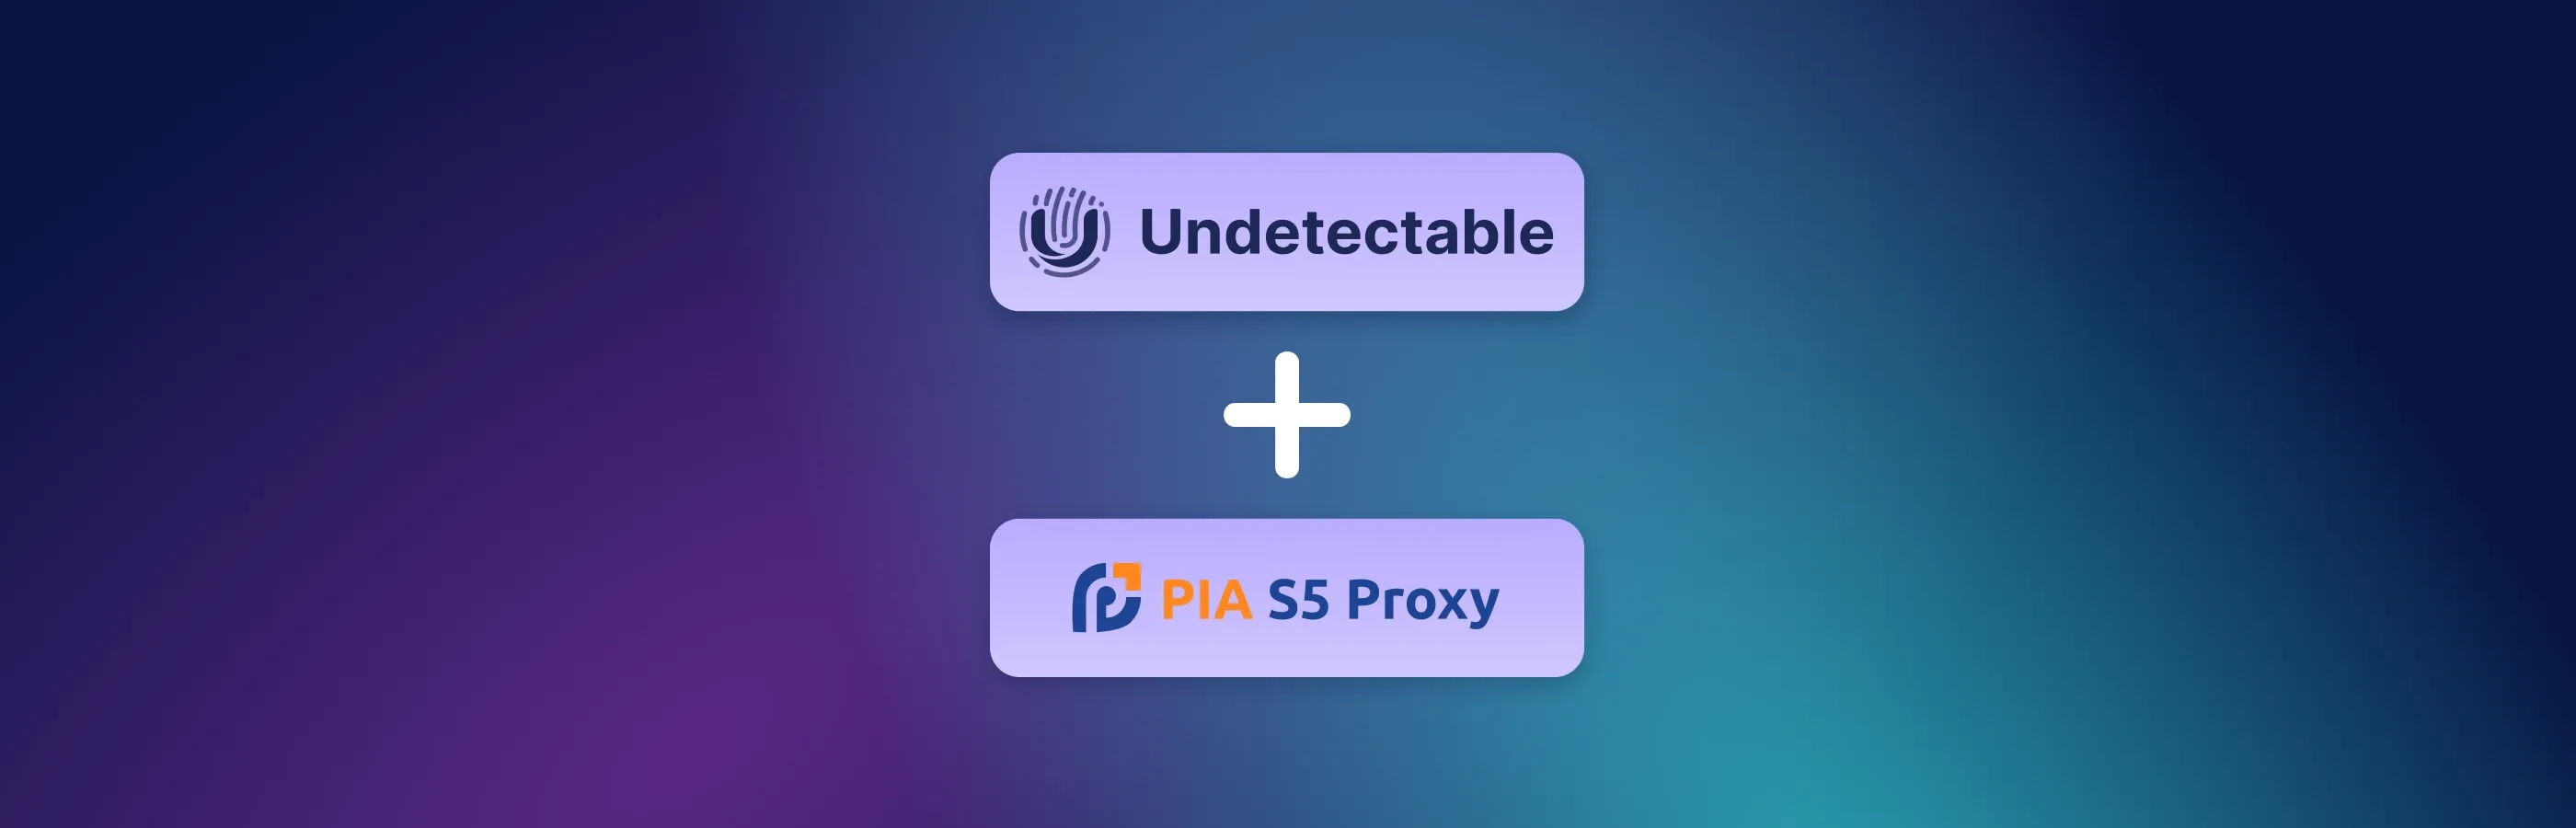 PIA S5プロキシをUndetectableブラウザに接続する方法と手順